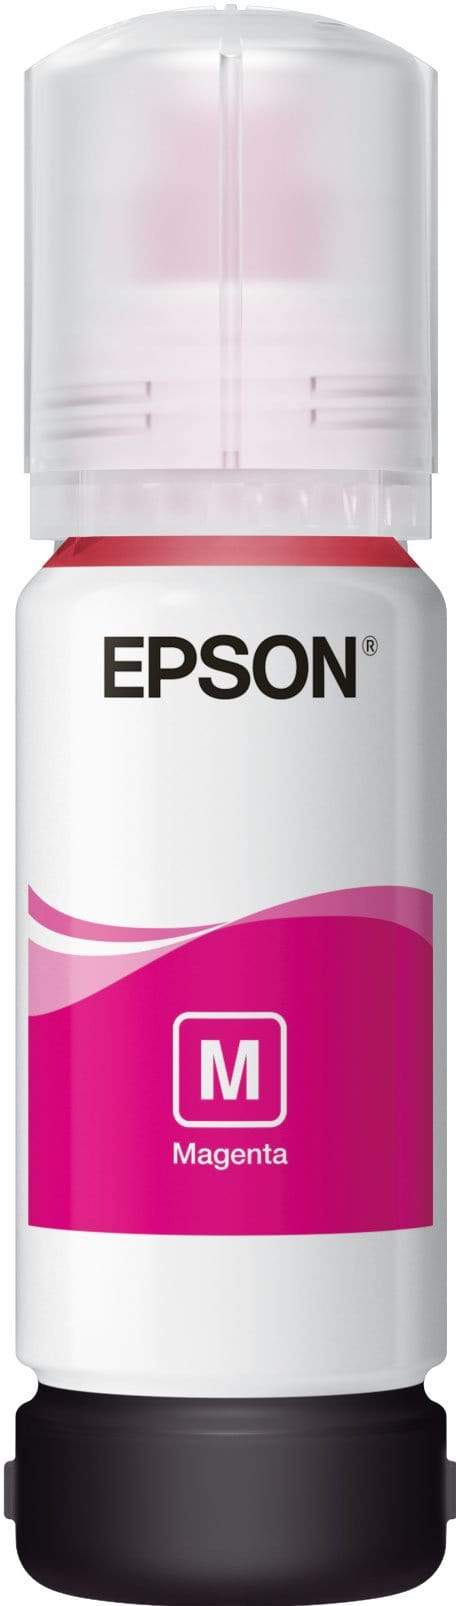 Epson 106 EcoTank Magenta Printer Ink Cartridge Original C13T00R340 Single-pack